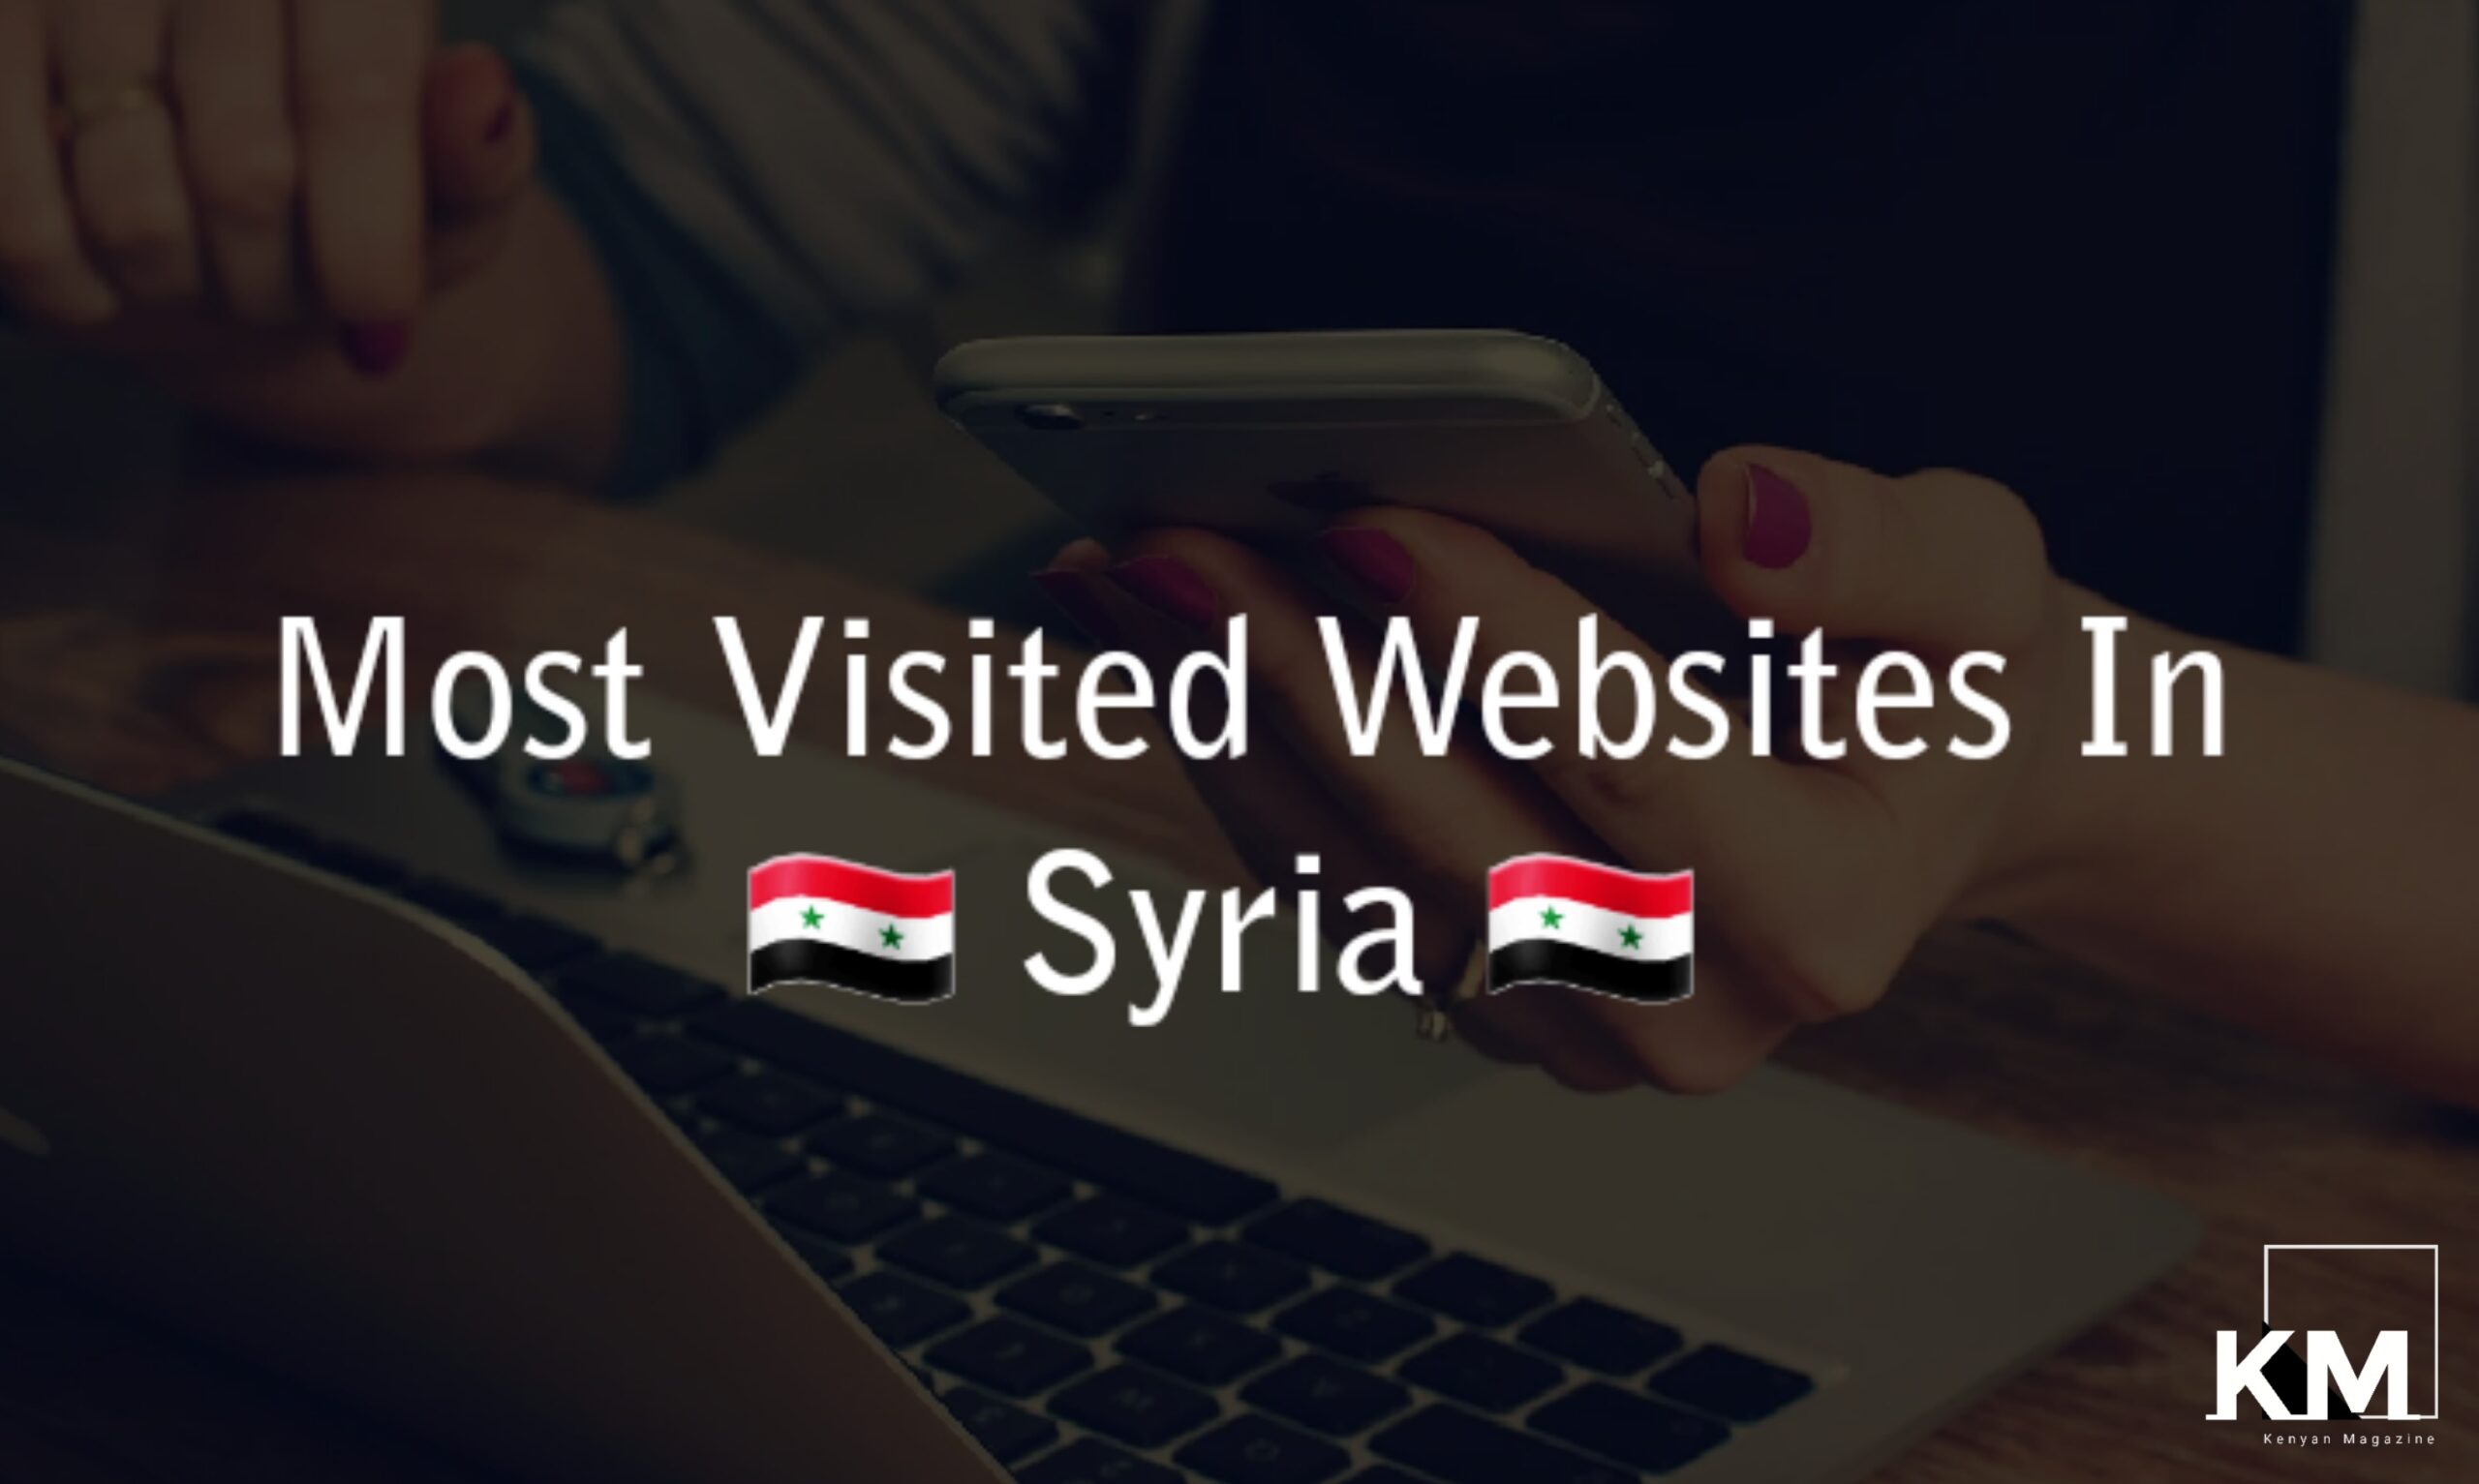 Most visited websites in Syria